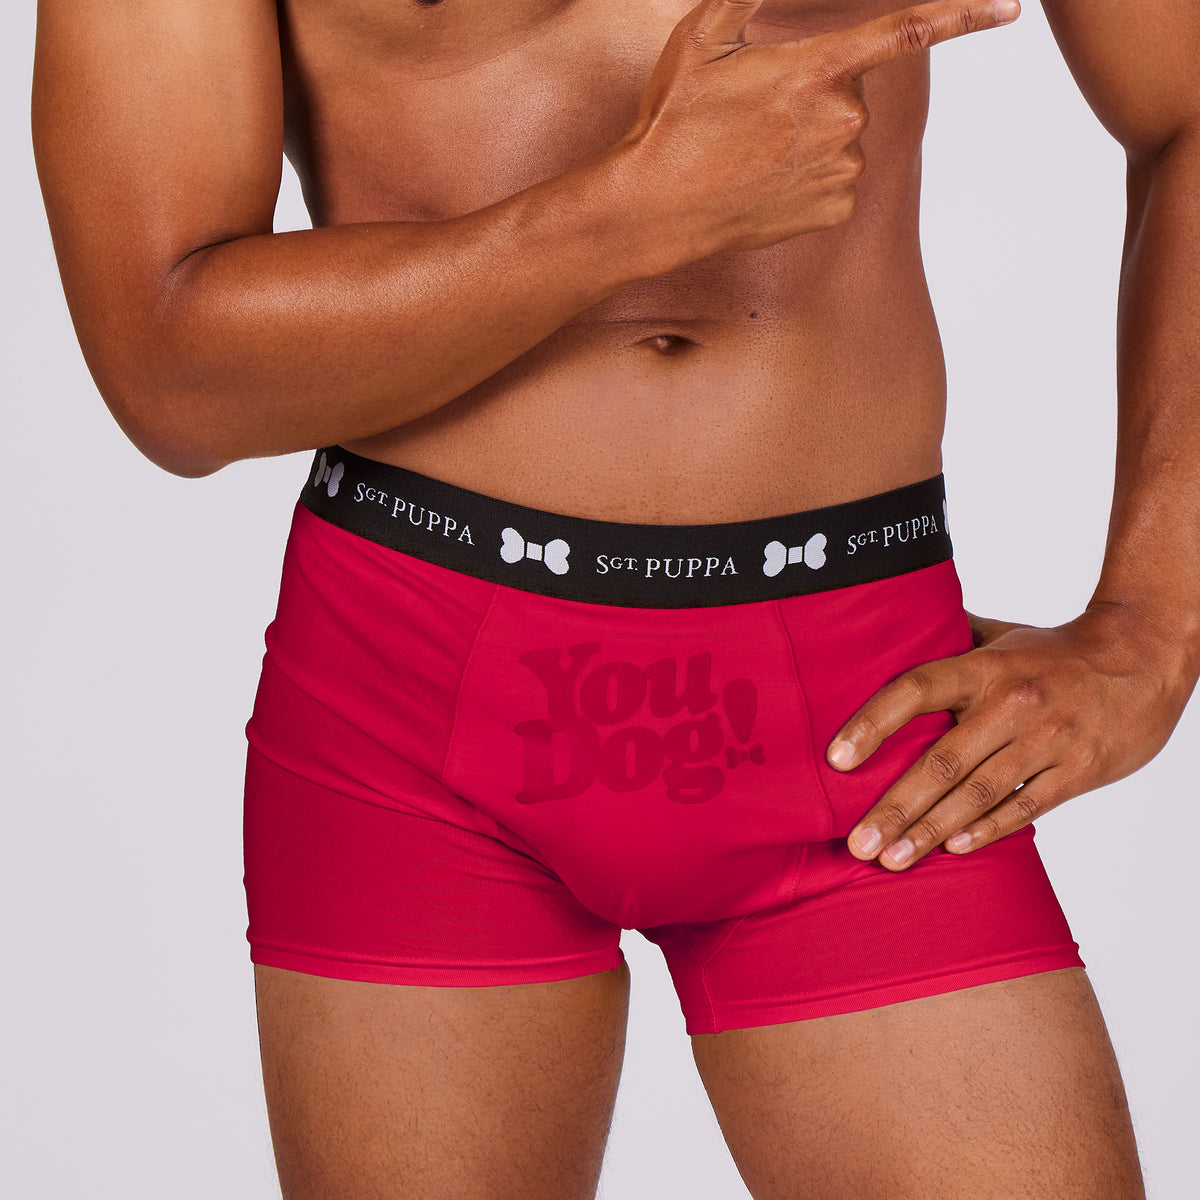 Garcon Model Orange Elite Sport Trunk Underwear For Men